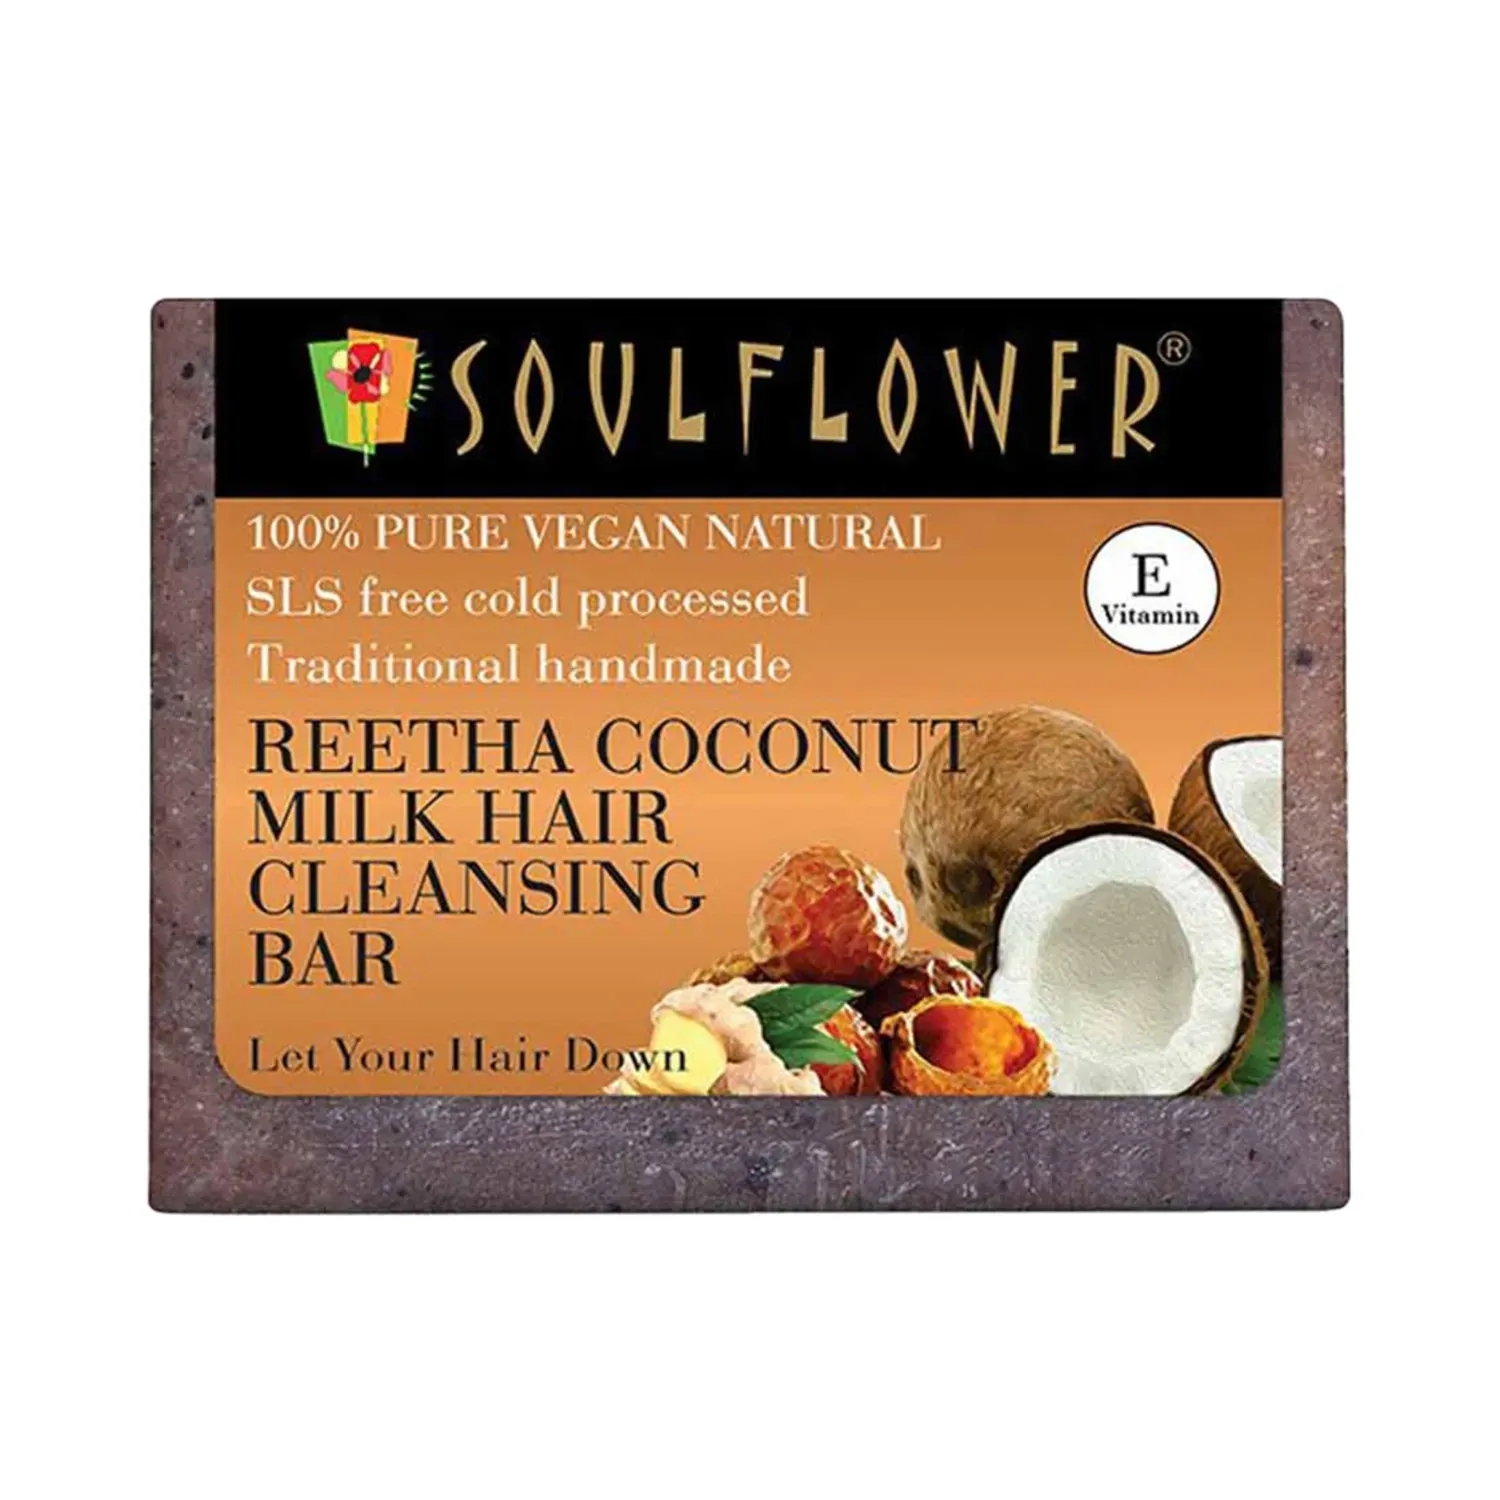 Soulflower Reetha Coconut Milk Hair Cleansing Bar Soap - (150g)